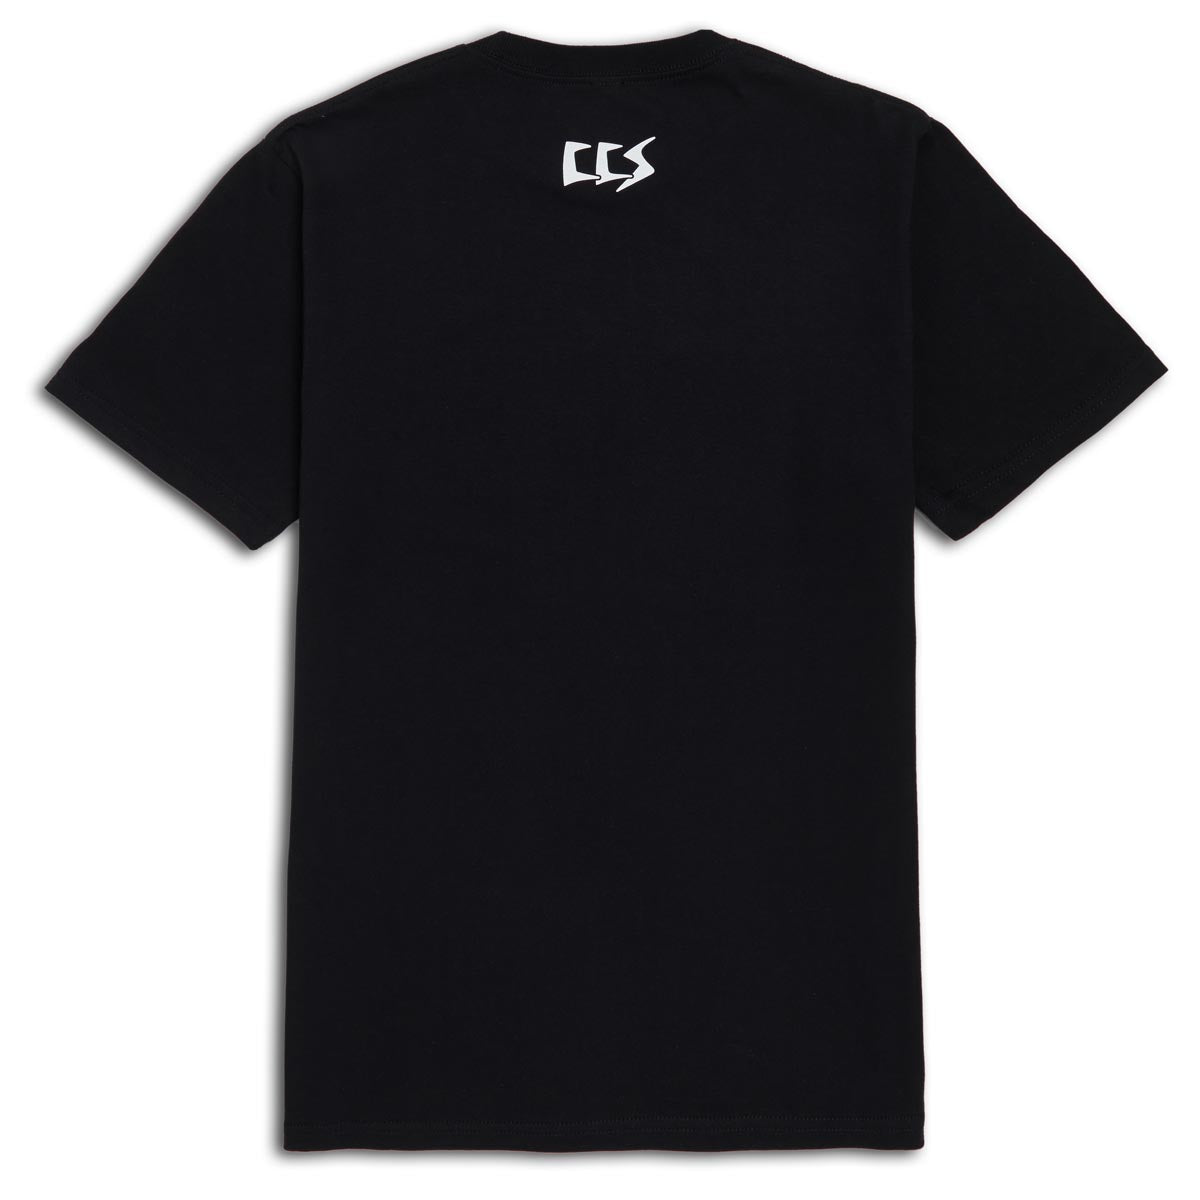 CCS OG Punk T-Shirt - Black/Green image 2